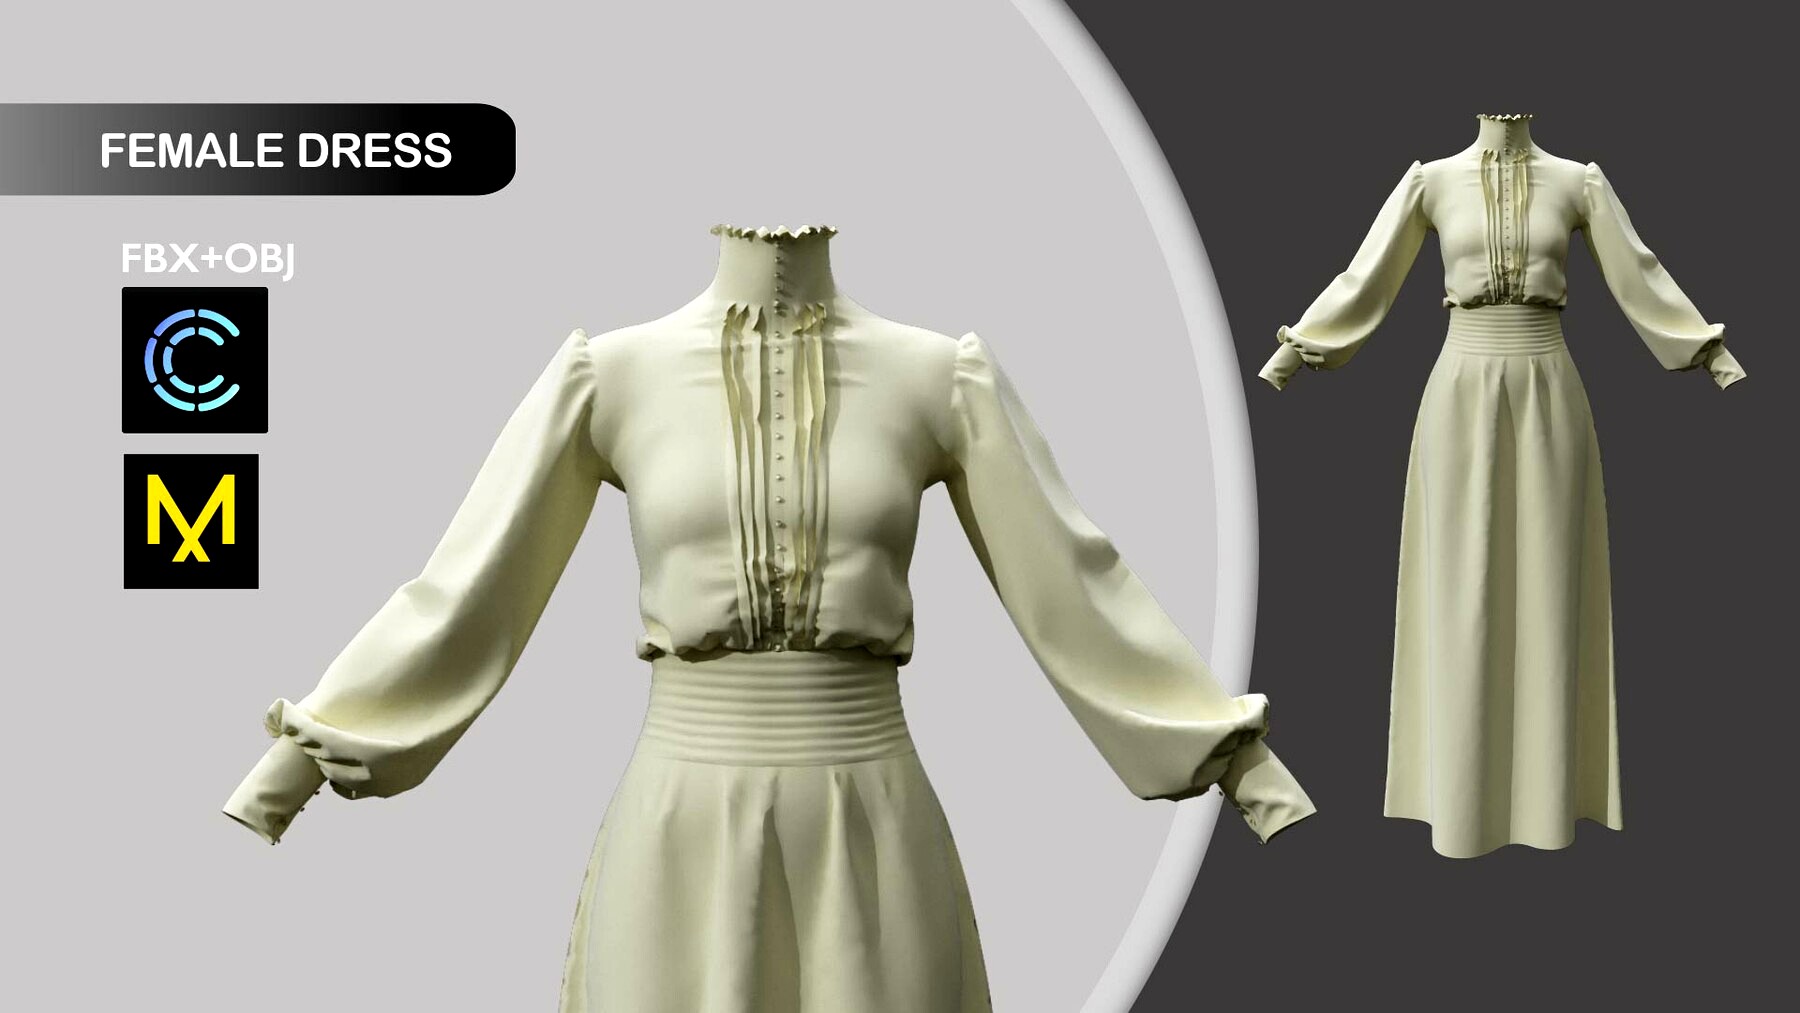 Dress Vintage Style Marvelous Designer/Clo3d project + OBJ + FBX